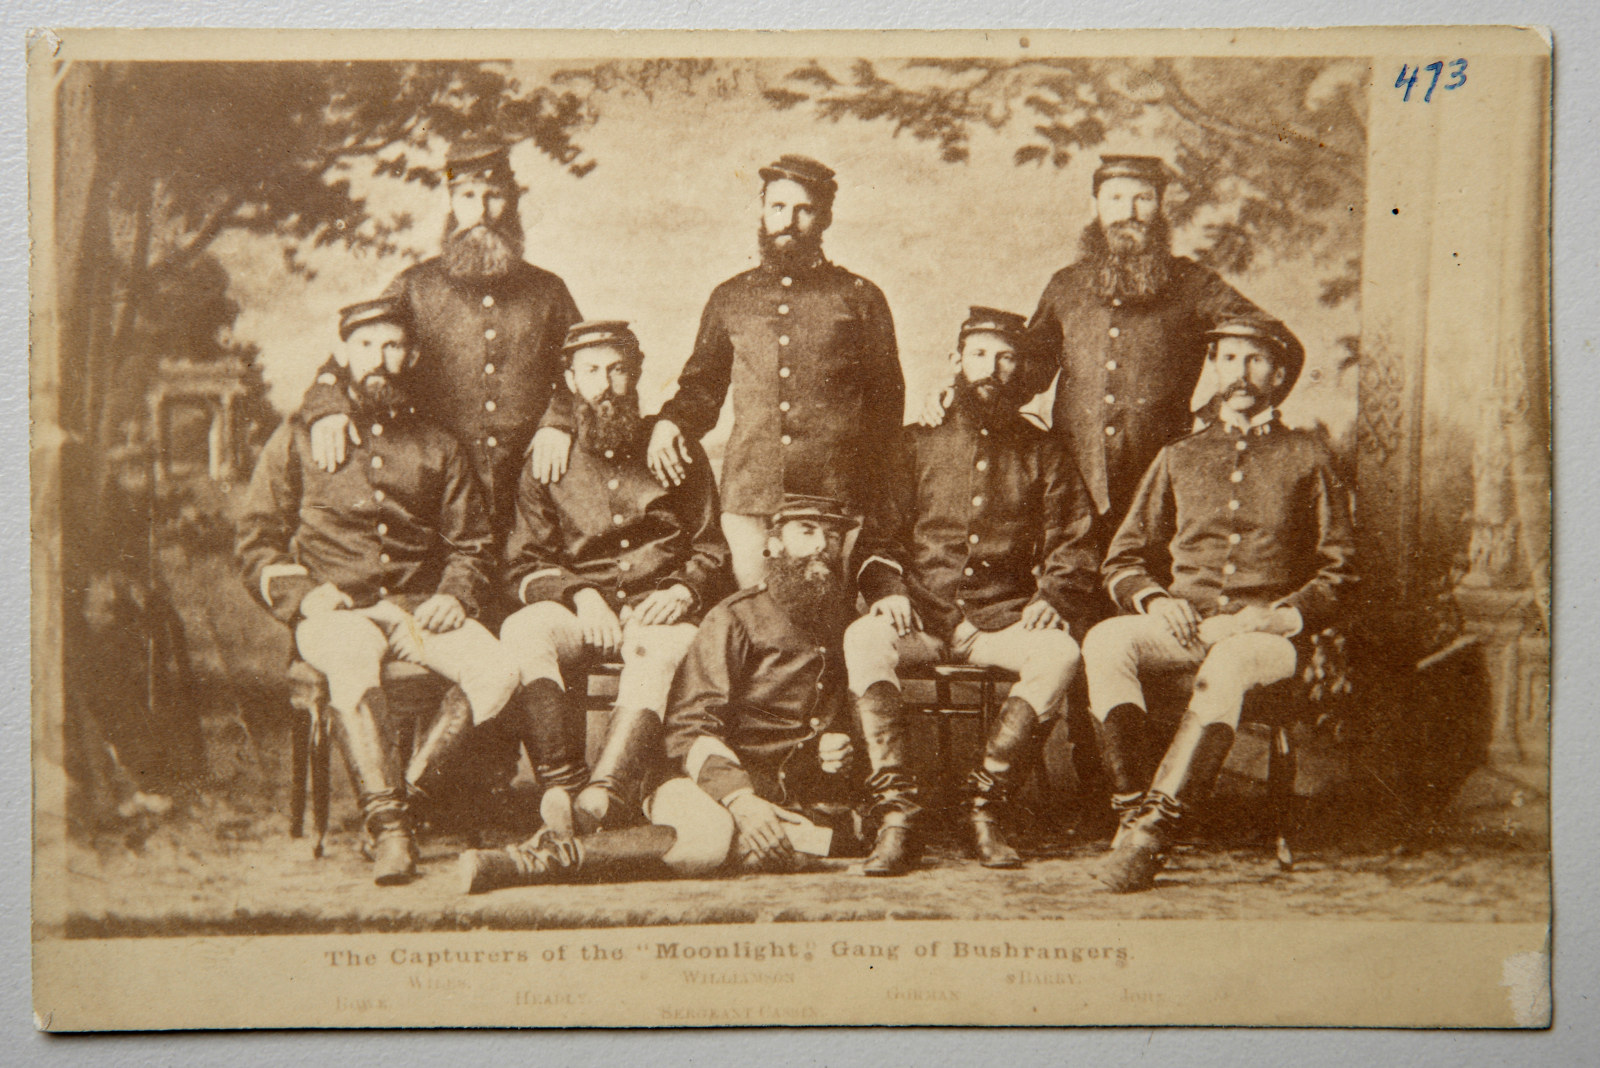 The Capturers of the Moonlight gang of Bushrangers (1879)